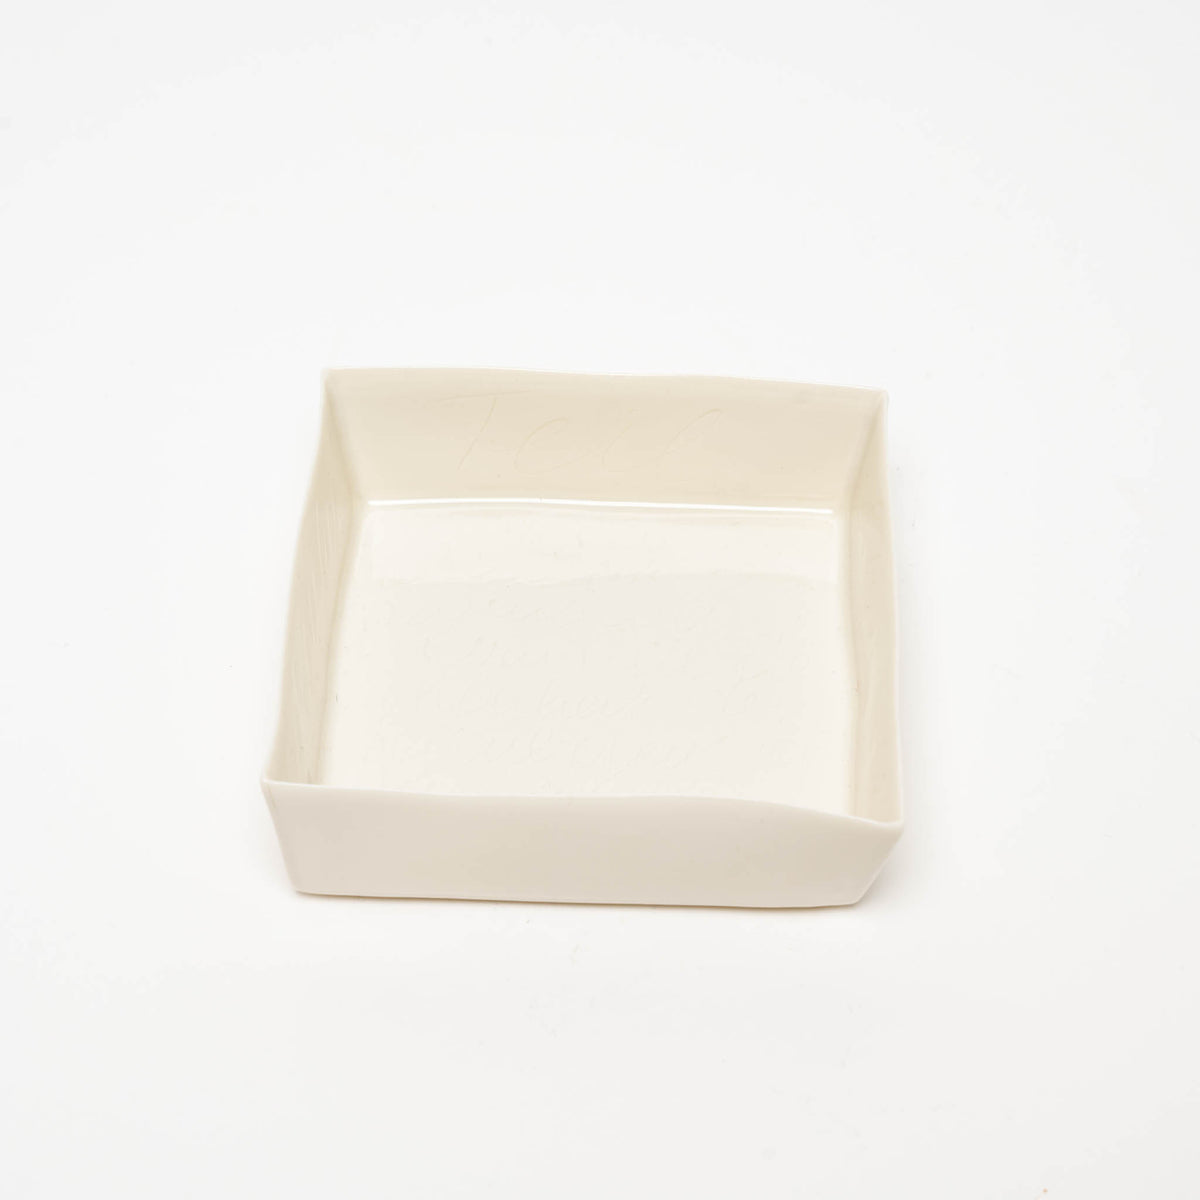 Schachtel aus Porzellan 11,5 x 11,5 cm